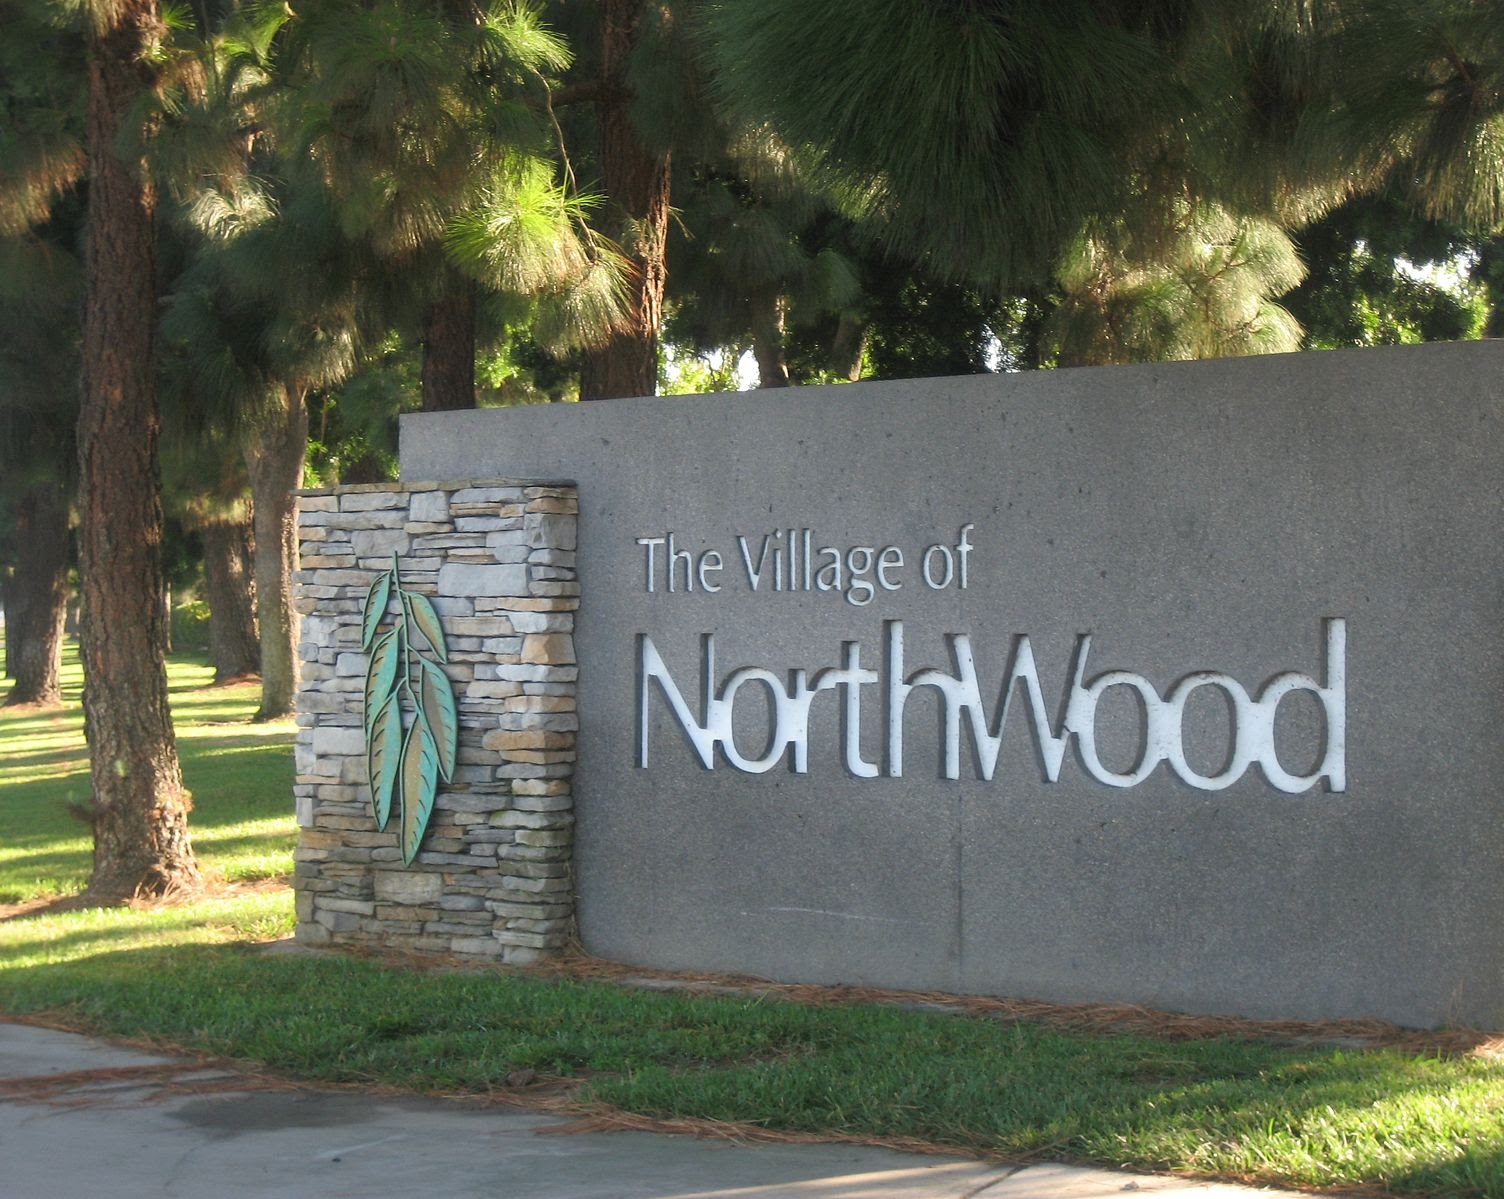 The Village of Northwood